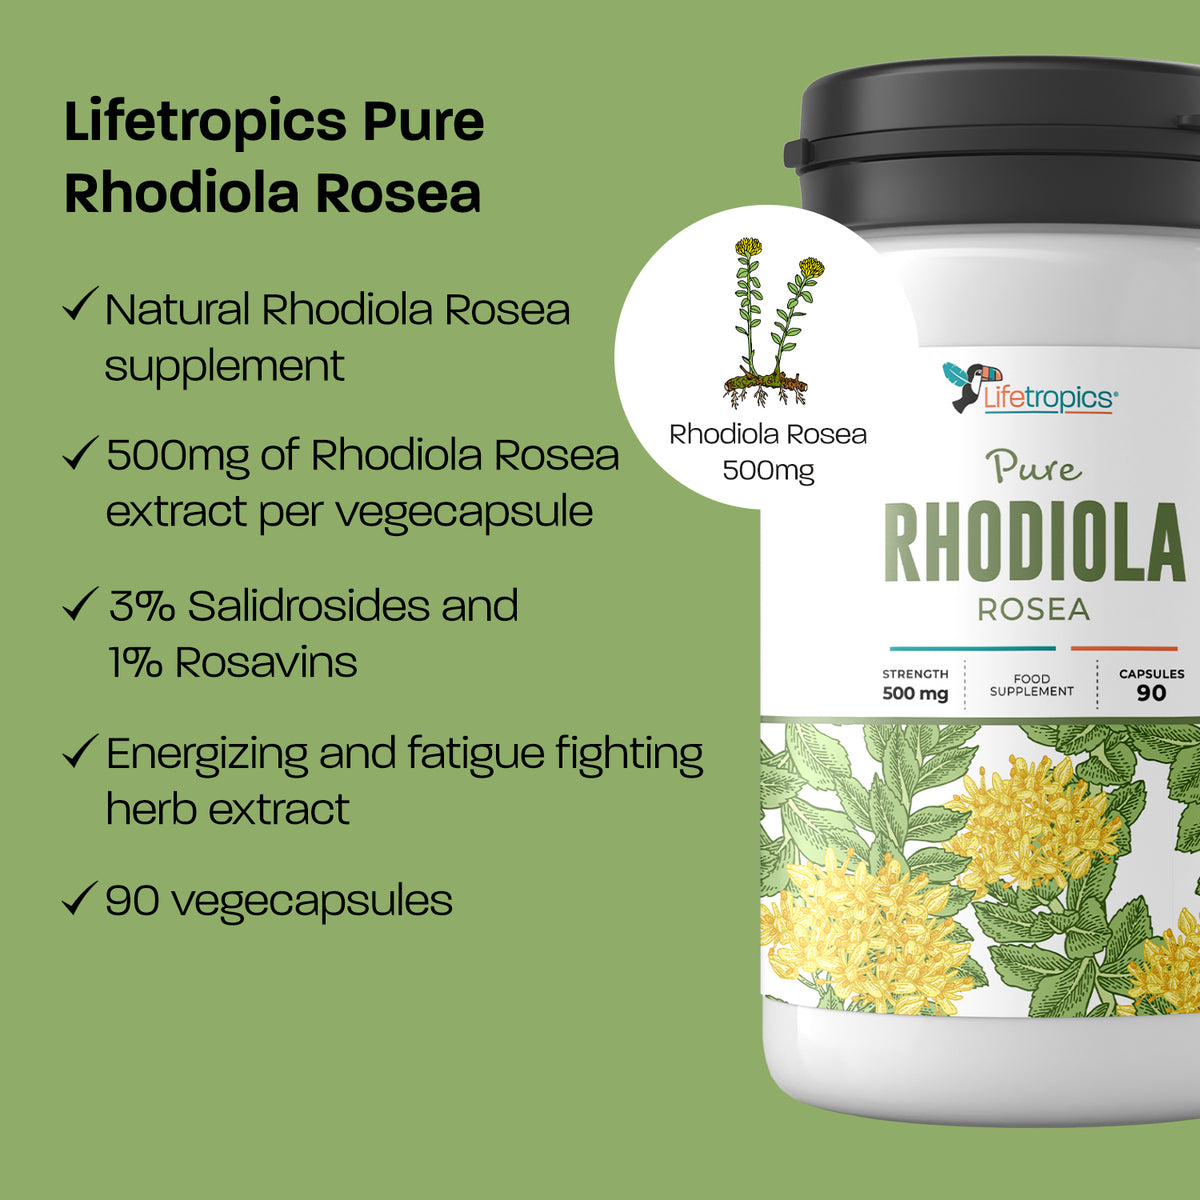 Pure Rhodiola Rosea